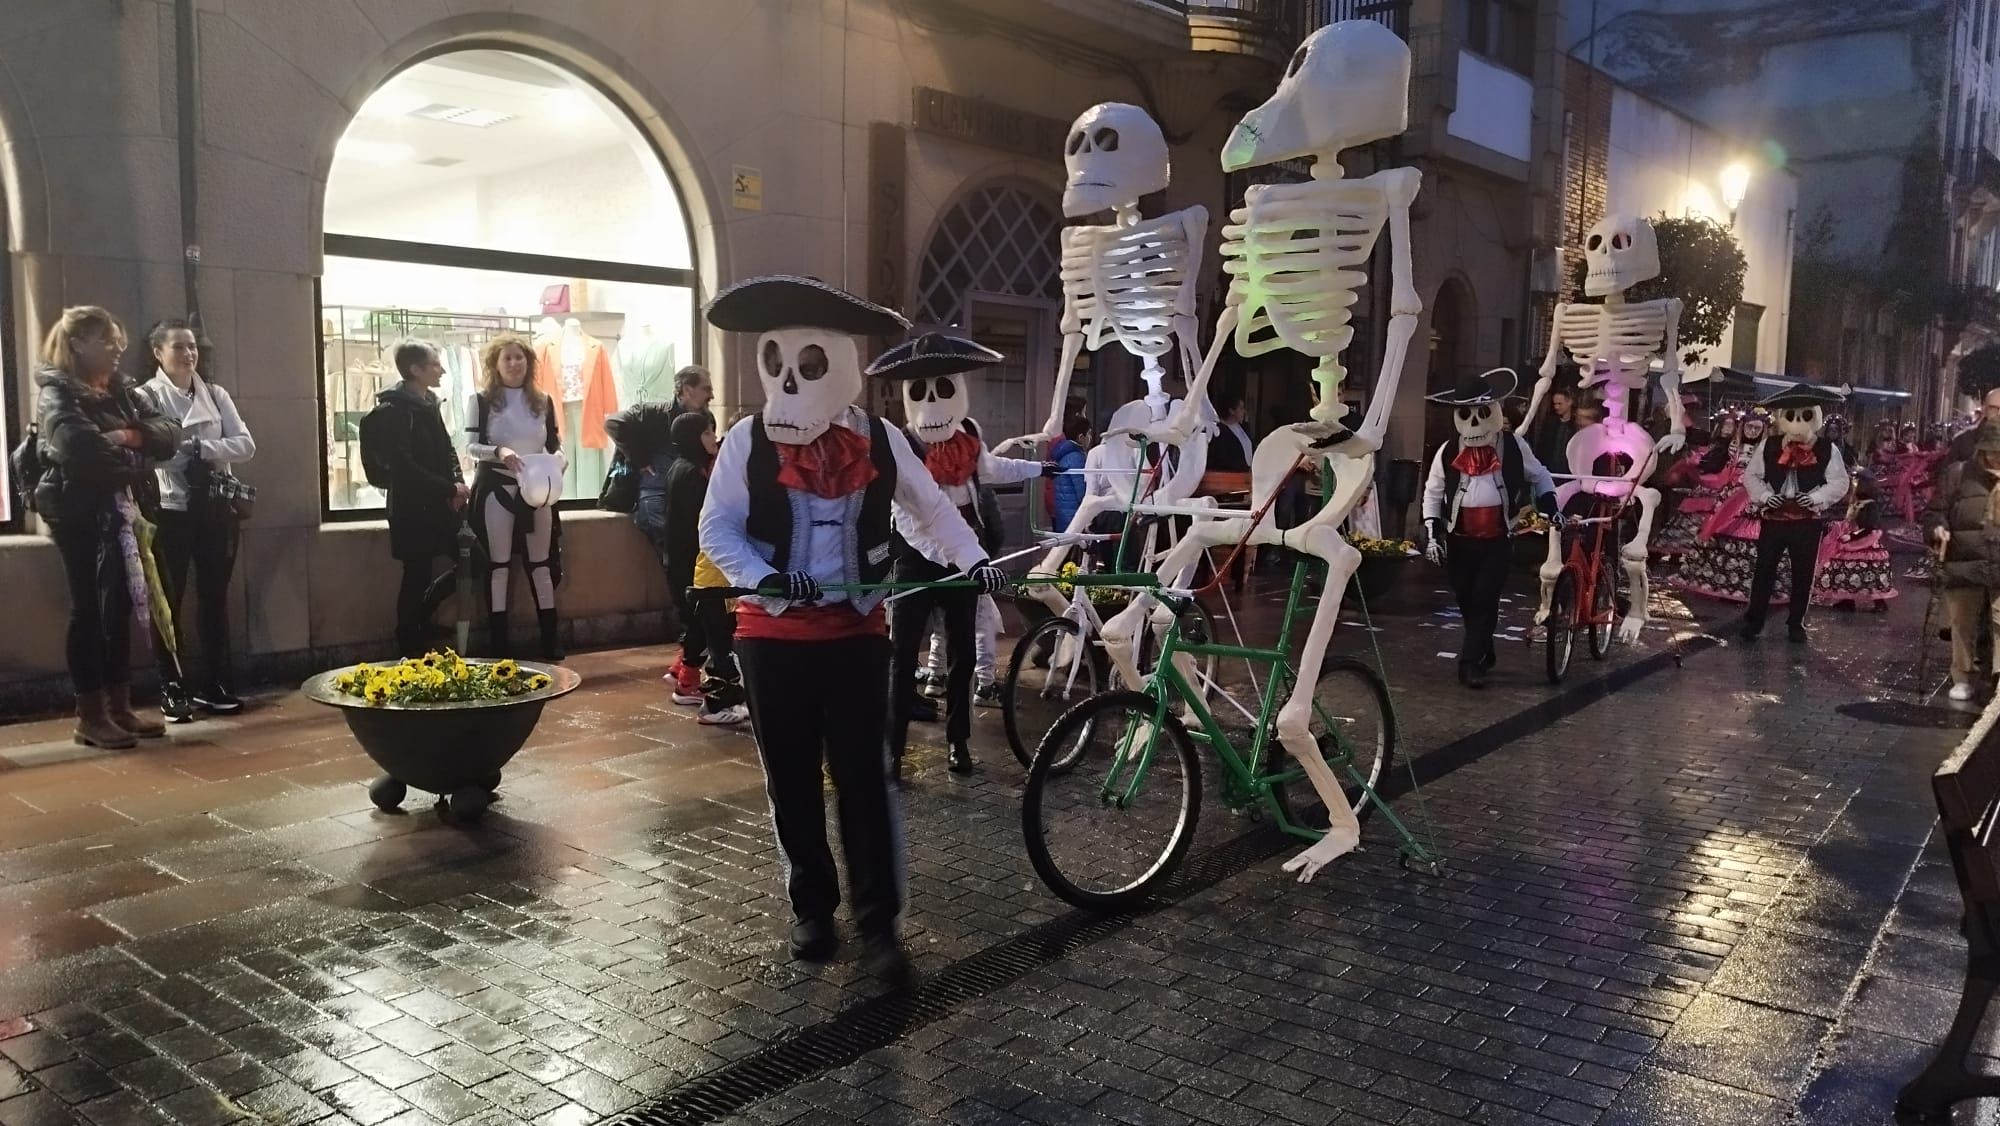 Multitudinario Carnaval en Cangas de Onís